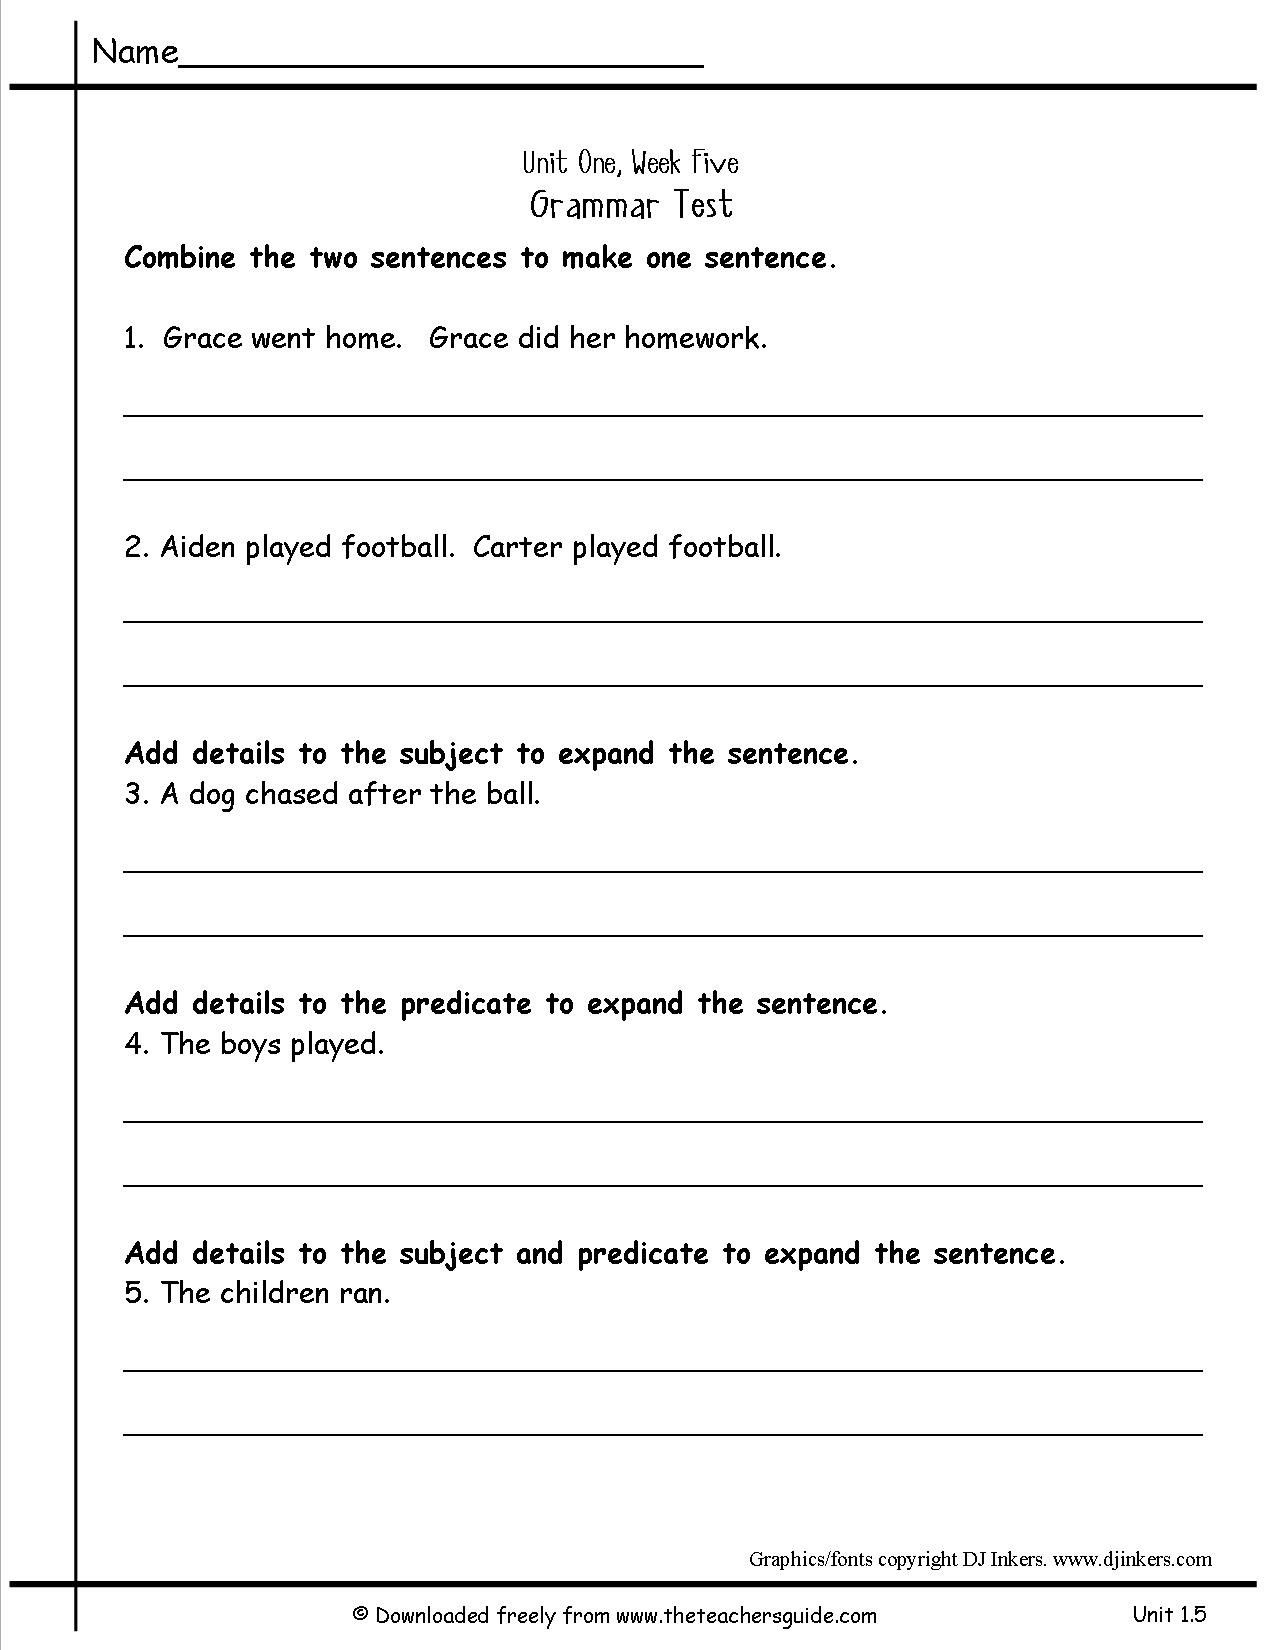 Science Worksheets 2Nd Grade Science Worksheets 2Rd Grade Free | Printable Science Worksheets For 2Nd Grade